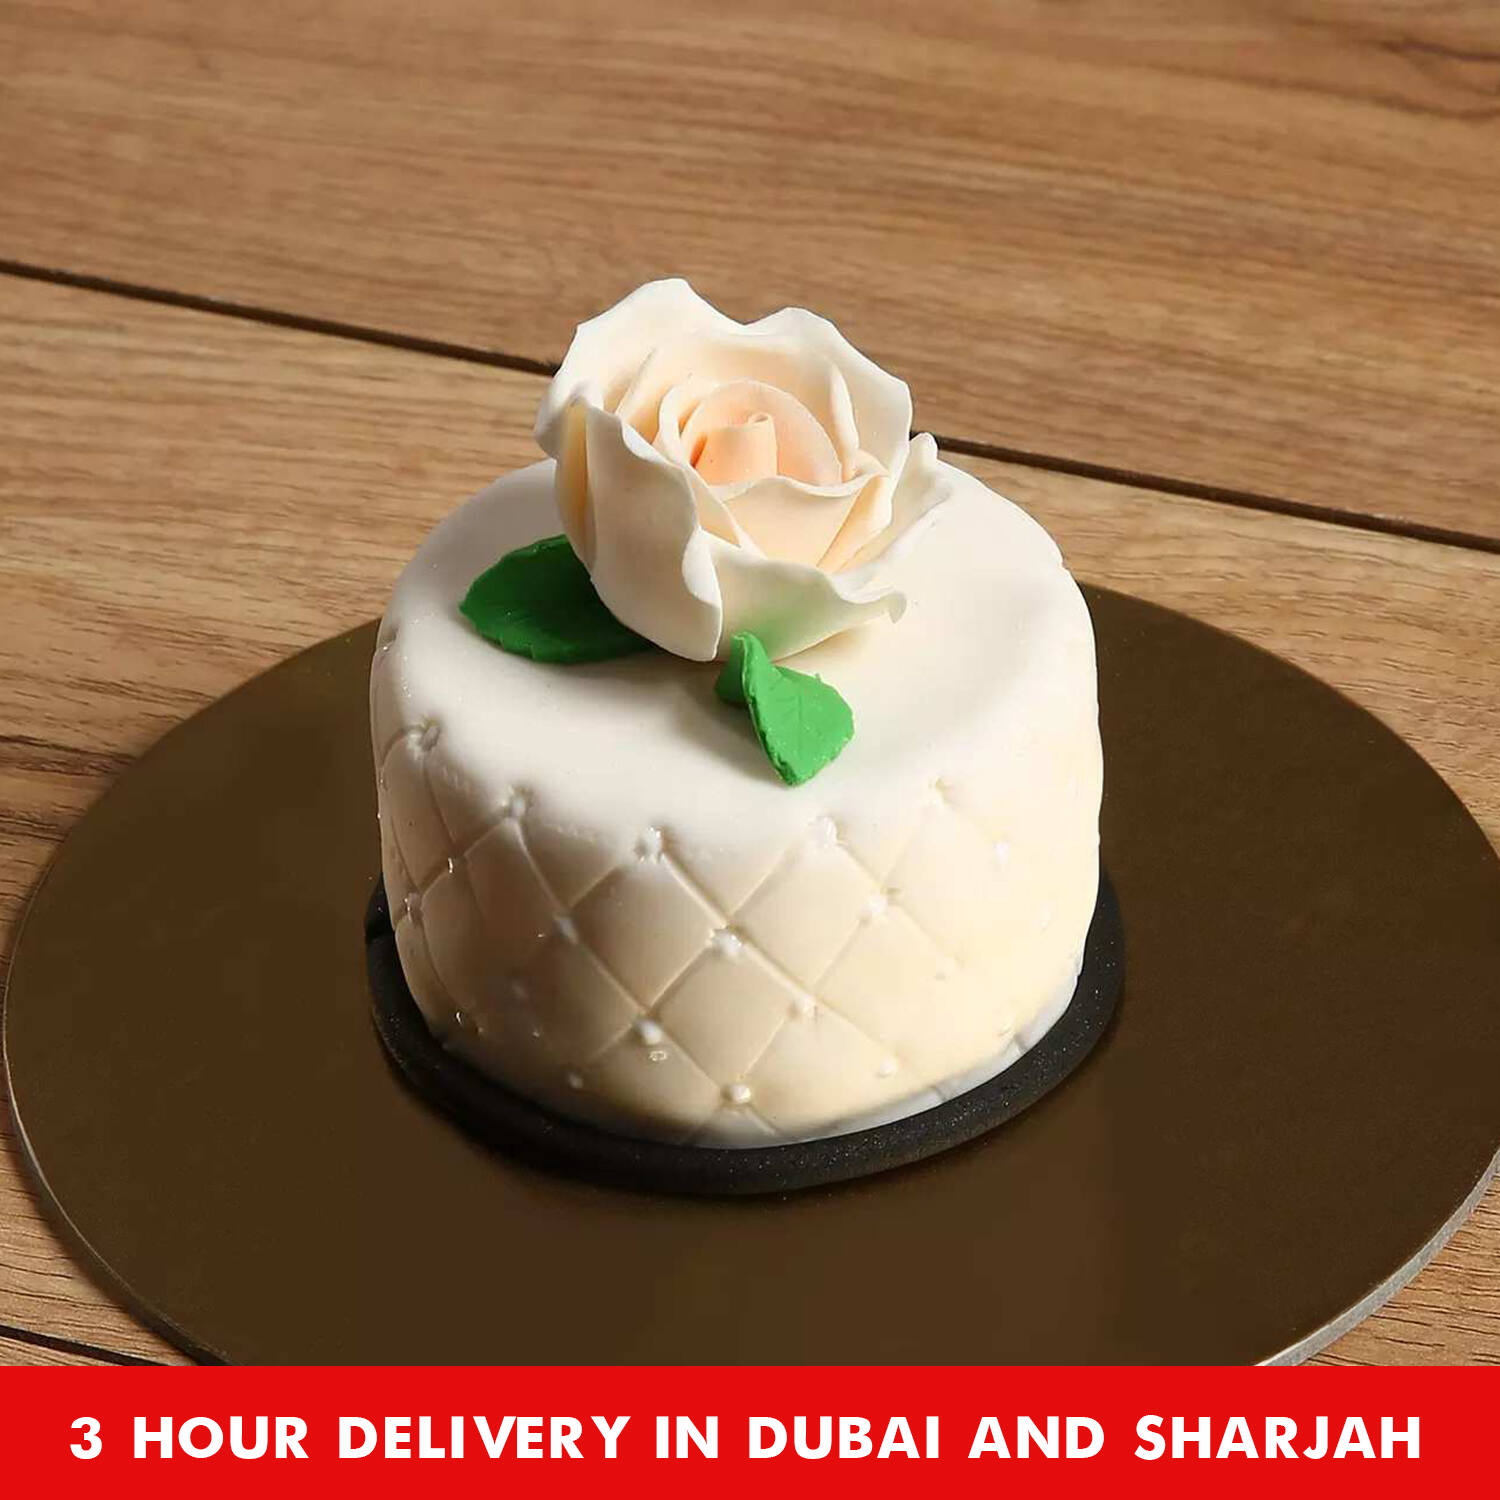 ANNIVERSARY 12004 Cake Delivery in Dubai | Anniversary Cakes Shop